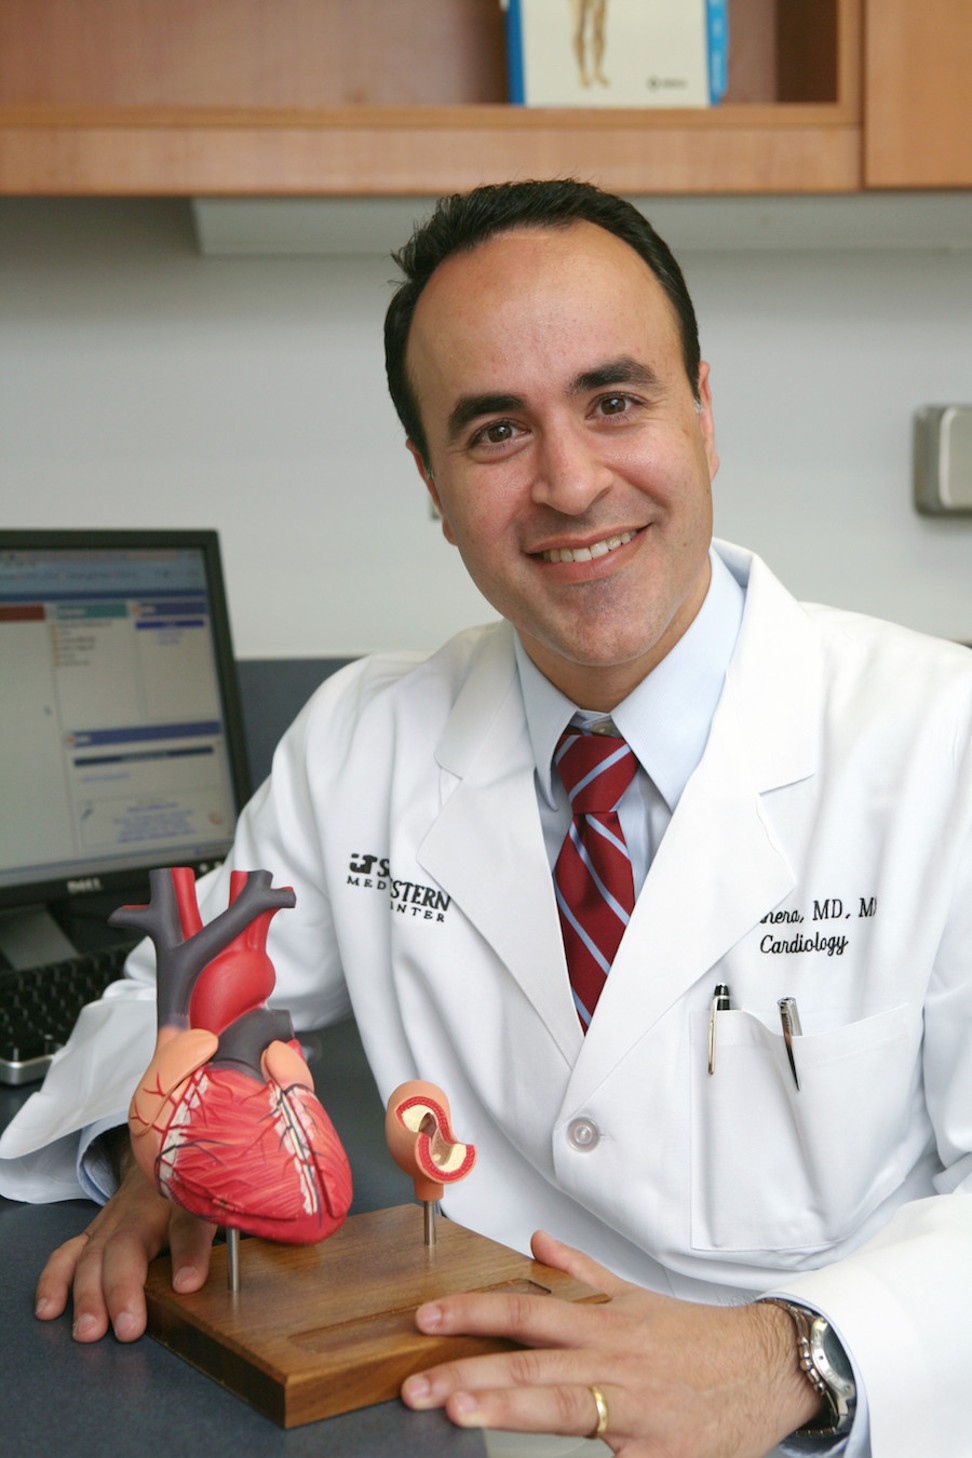 Amit Khera is a cardiologist at Massachusetts General Hospital.